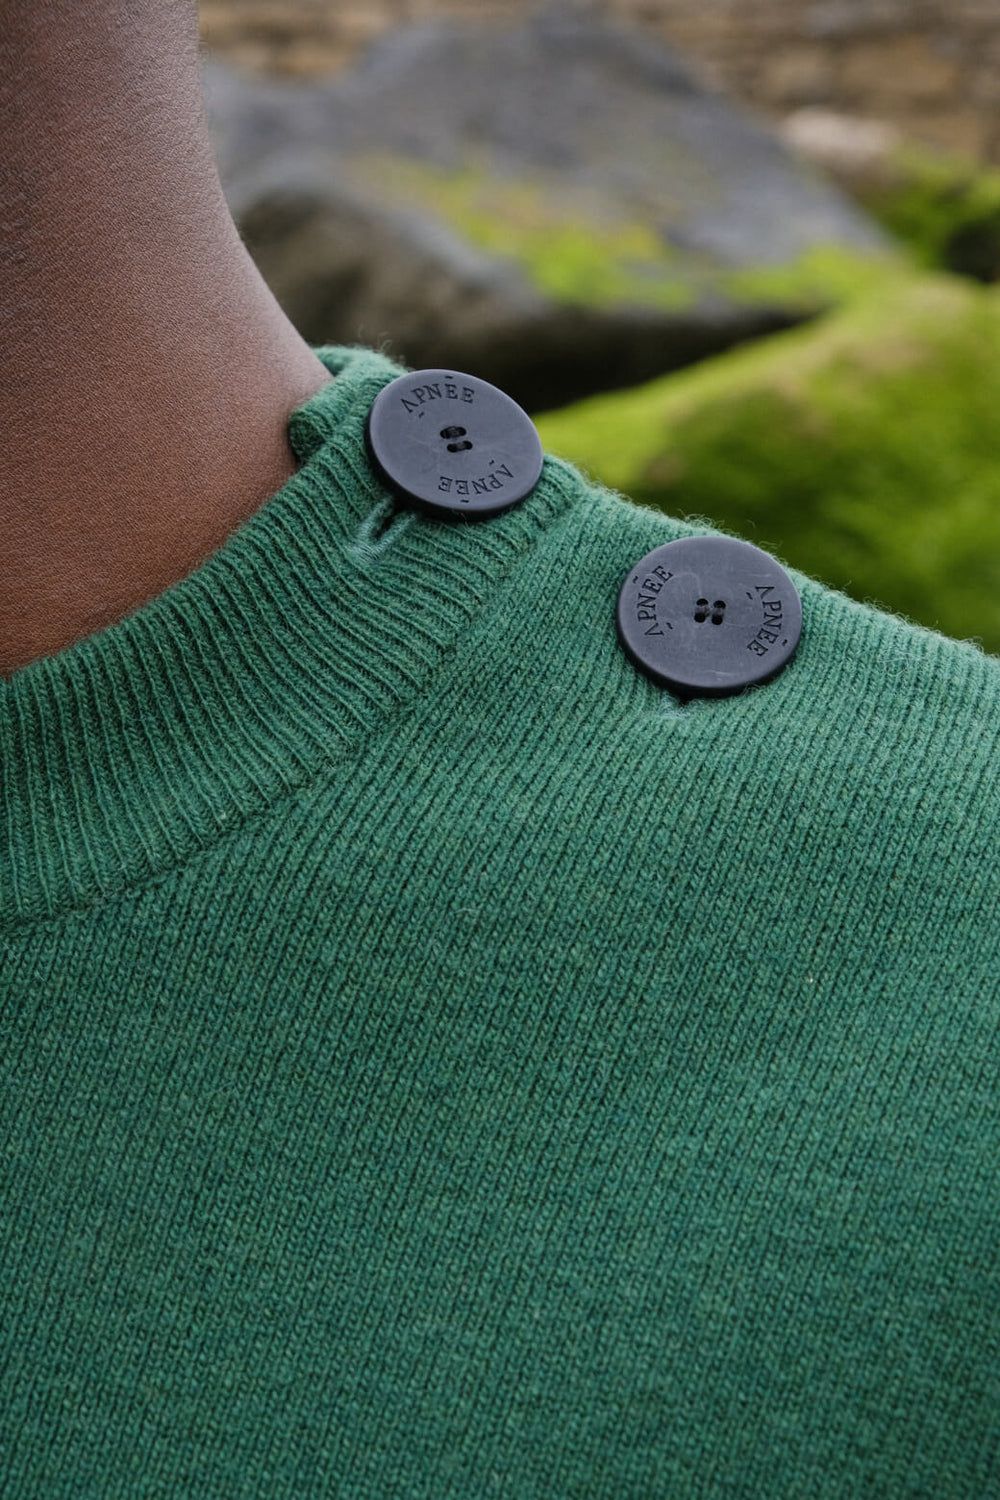 Marin Jack sweater - Apnee